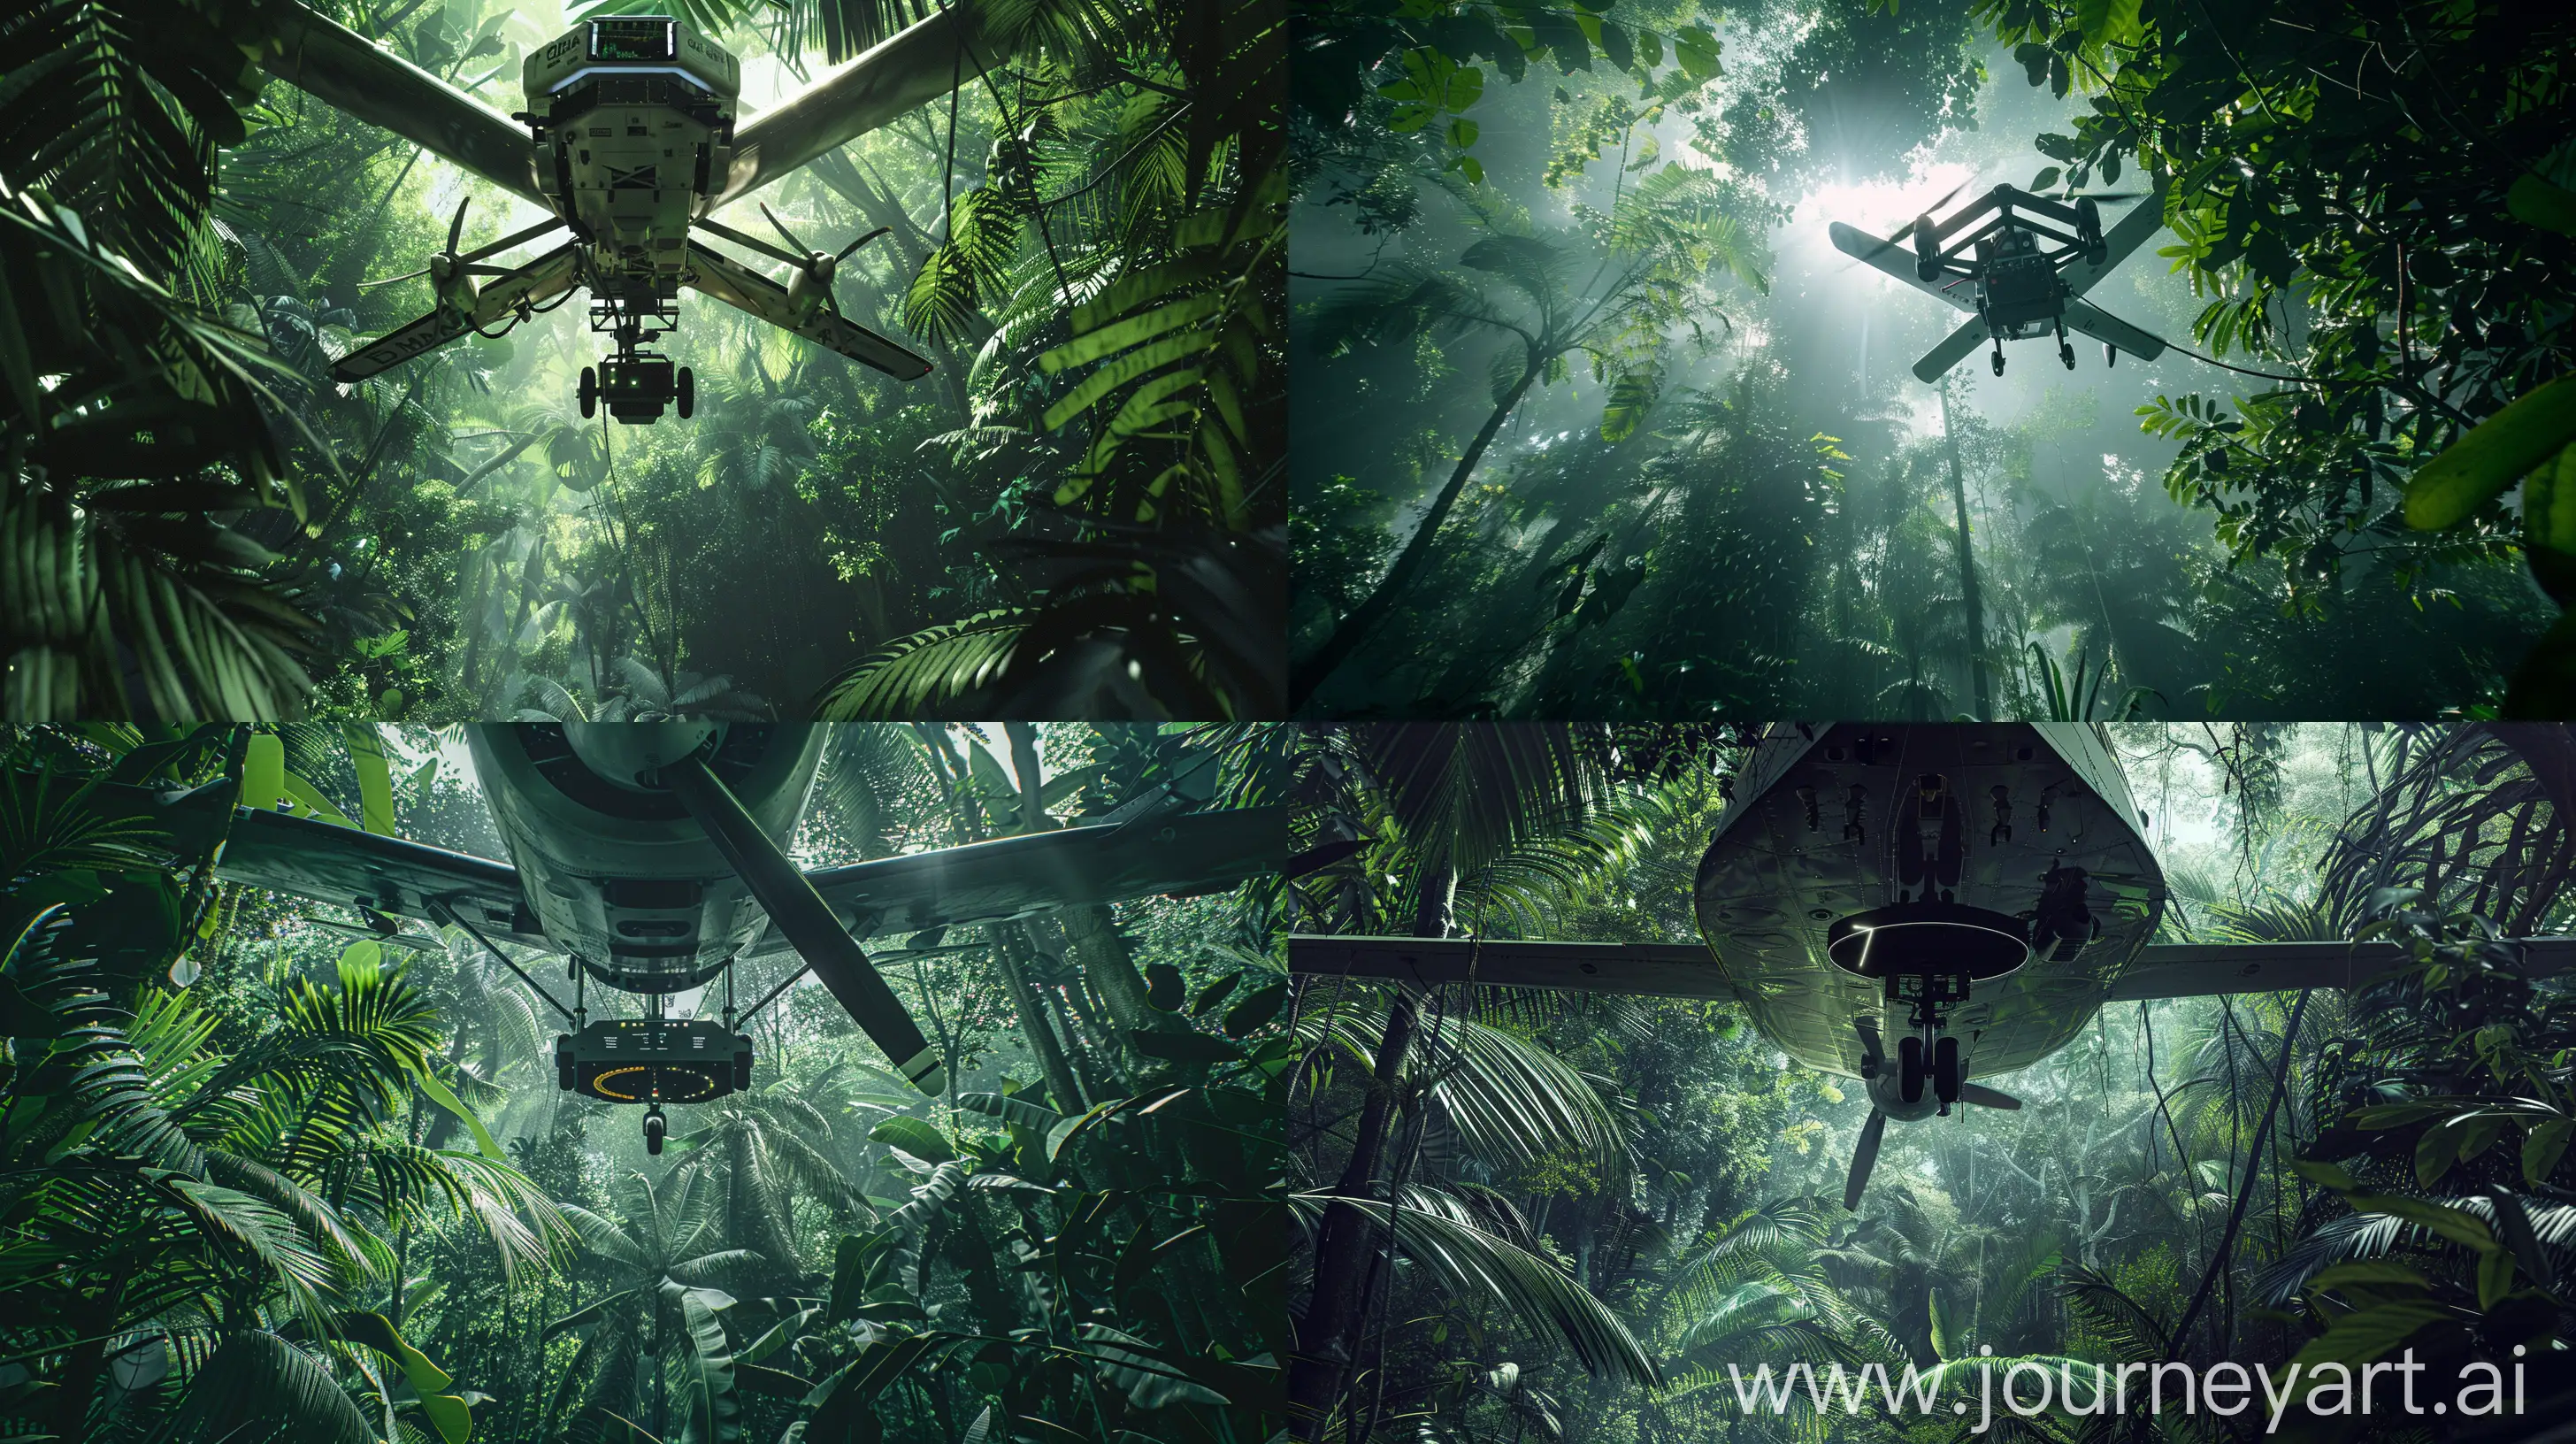 Survey-Propeller-Plane-Lidar-Scanning-Dense-Tropical-Rainforest